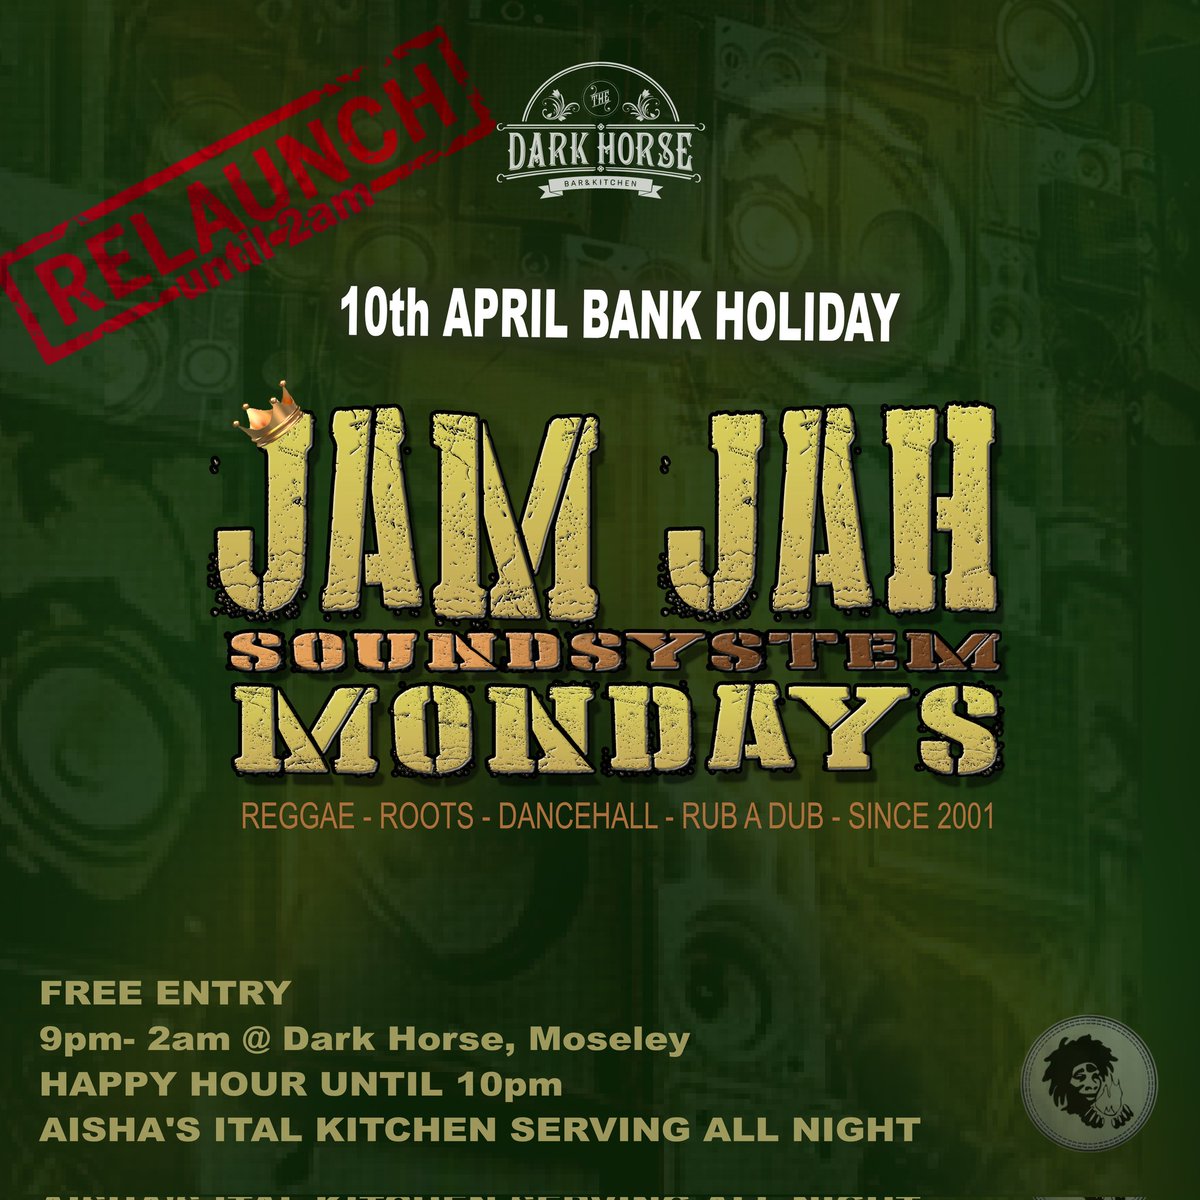 10th April at the @DarkHorseMosele, @JamJahSound1 Reggae Mondays are back! Special guest @YTReggae alongside @MykiTuff @bongo_damo for a night of #soundsystem vibes #reggae #dancehall #jamjah #mondaymotivation  #itsabrumting #badlands #birmingham #moseley #rubadub